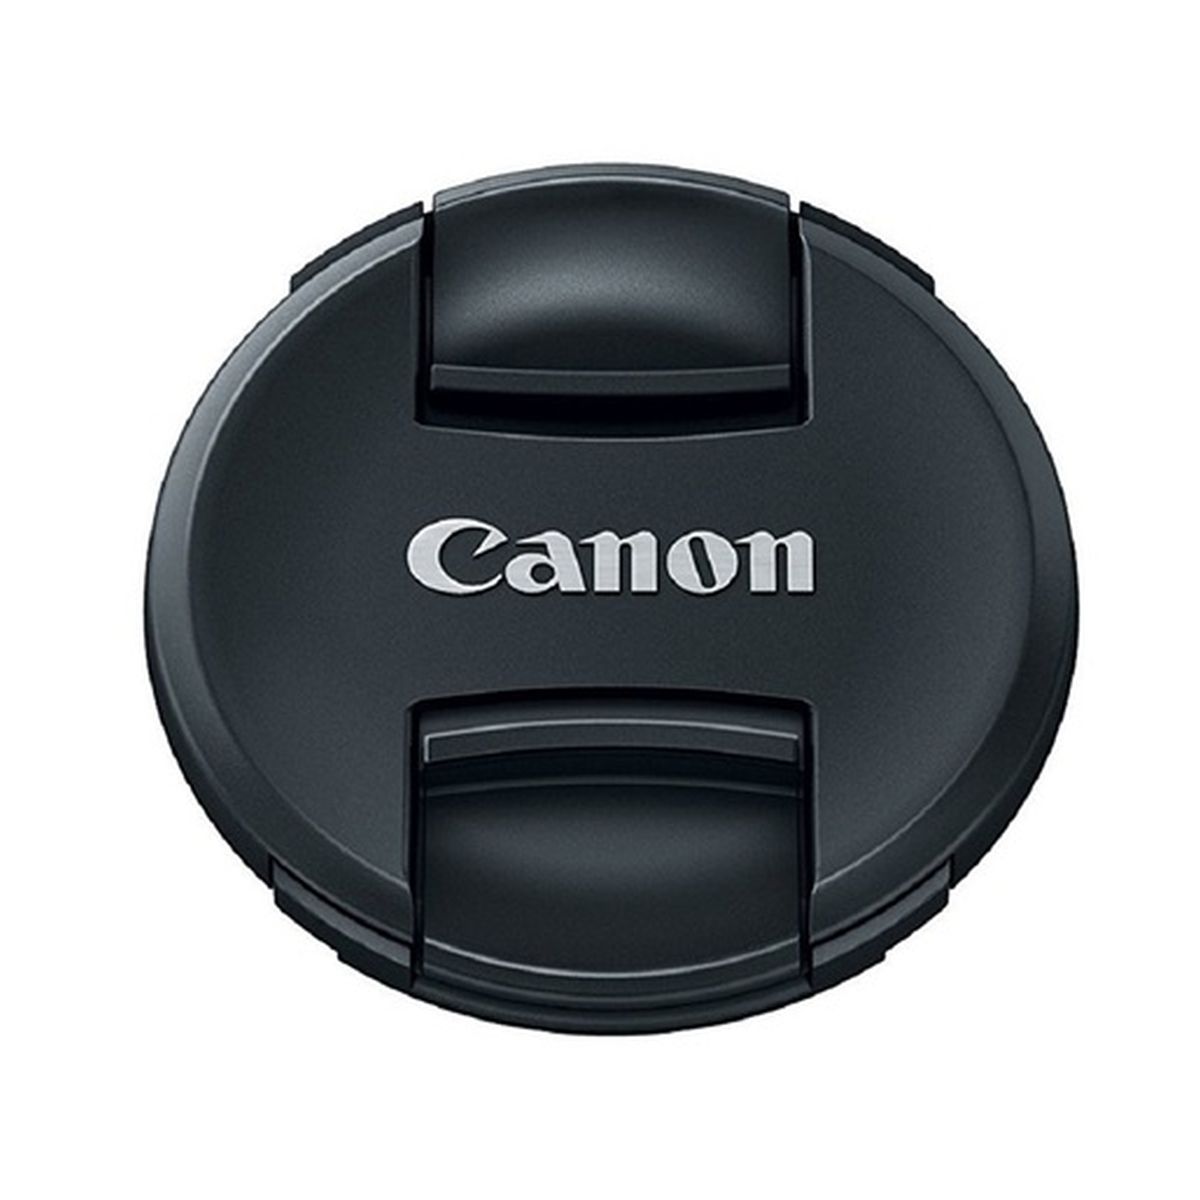 Canon EF-S35 Objektivdeckel